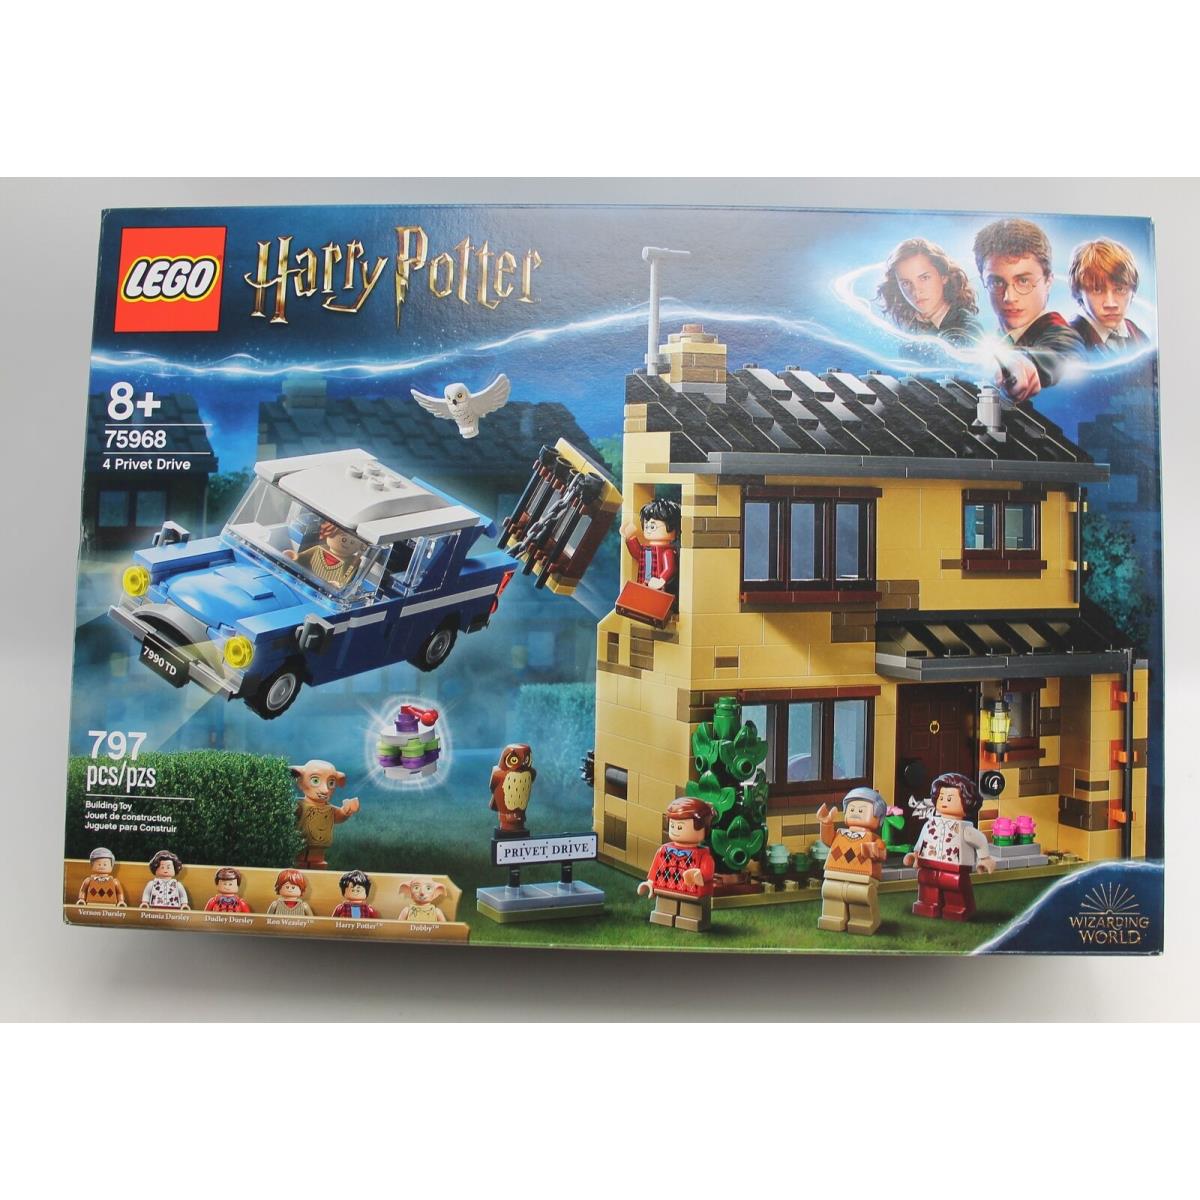 Lego Harry Potter 4 Privet Drive Set 75968